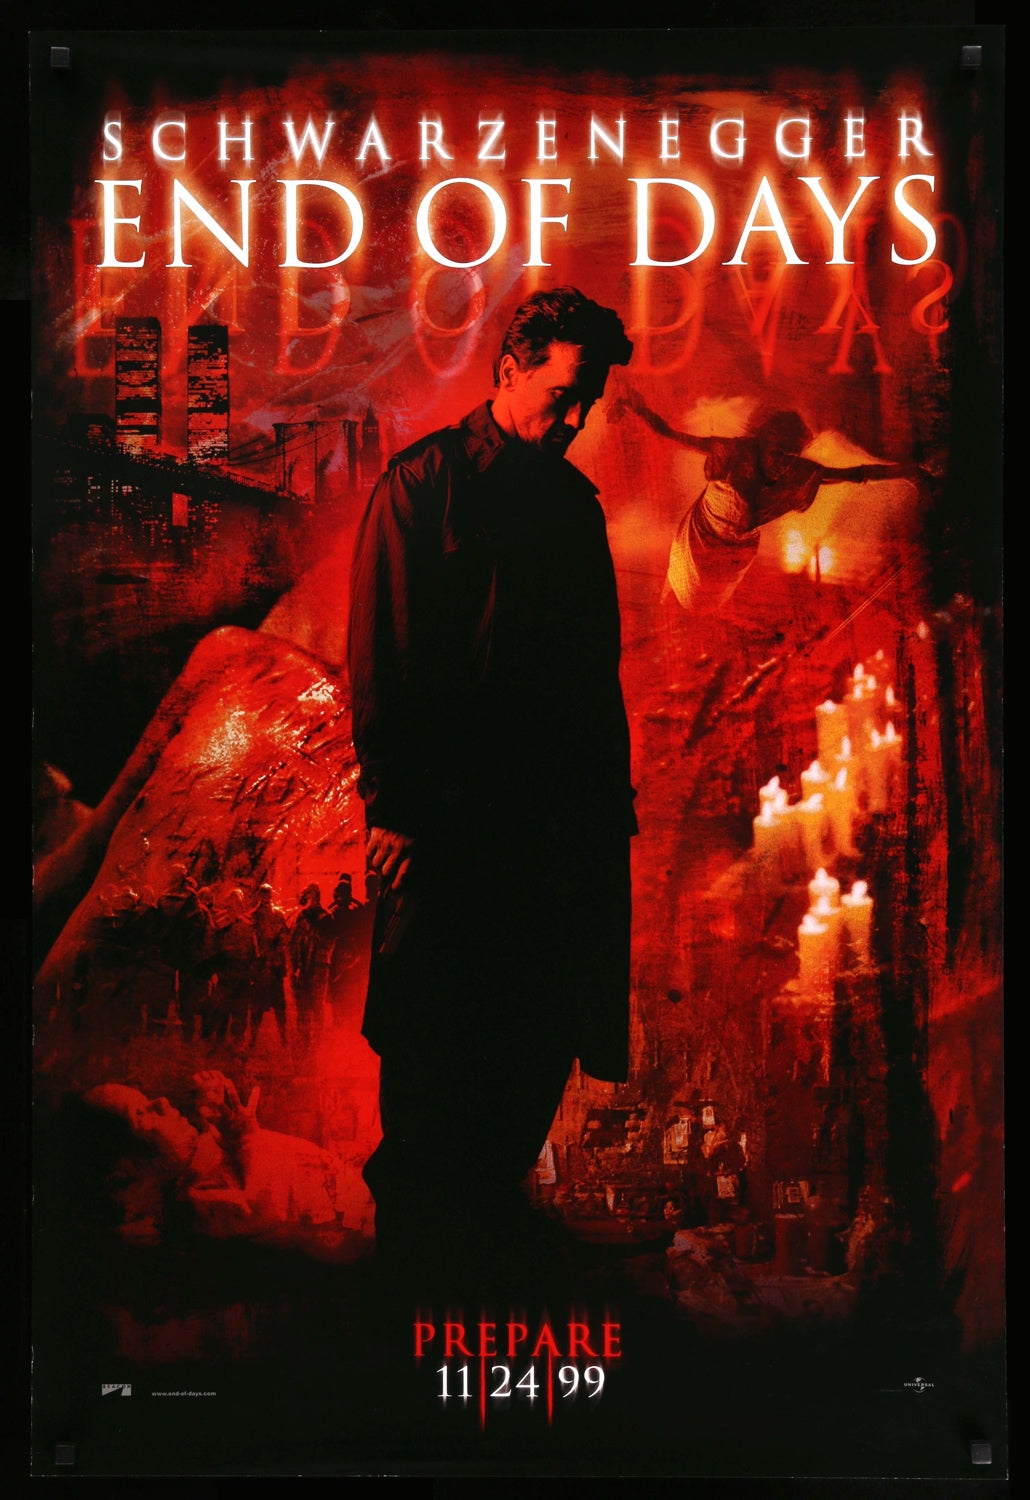 End of Days (1999) original movie poster for sale at Original Film Art